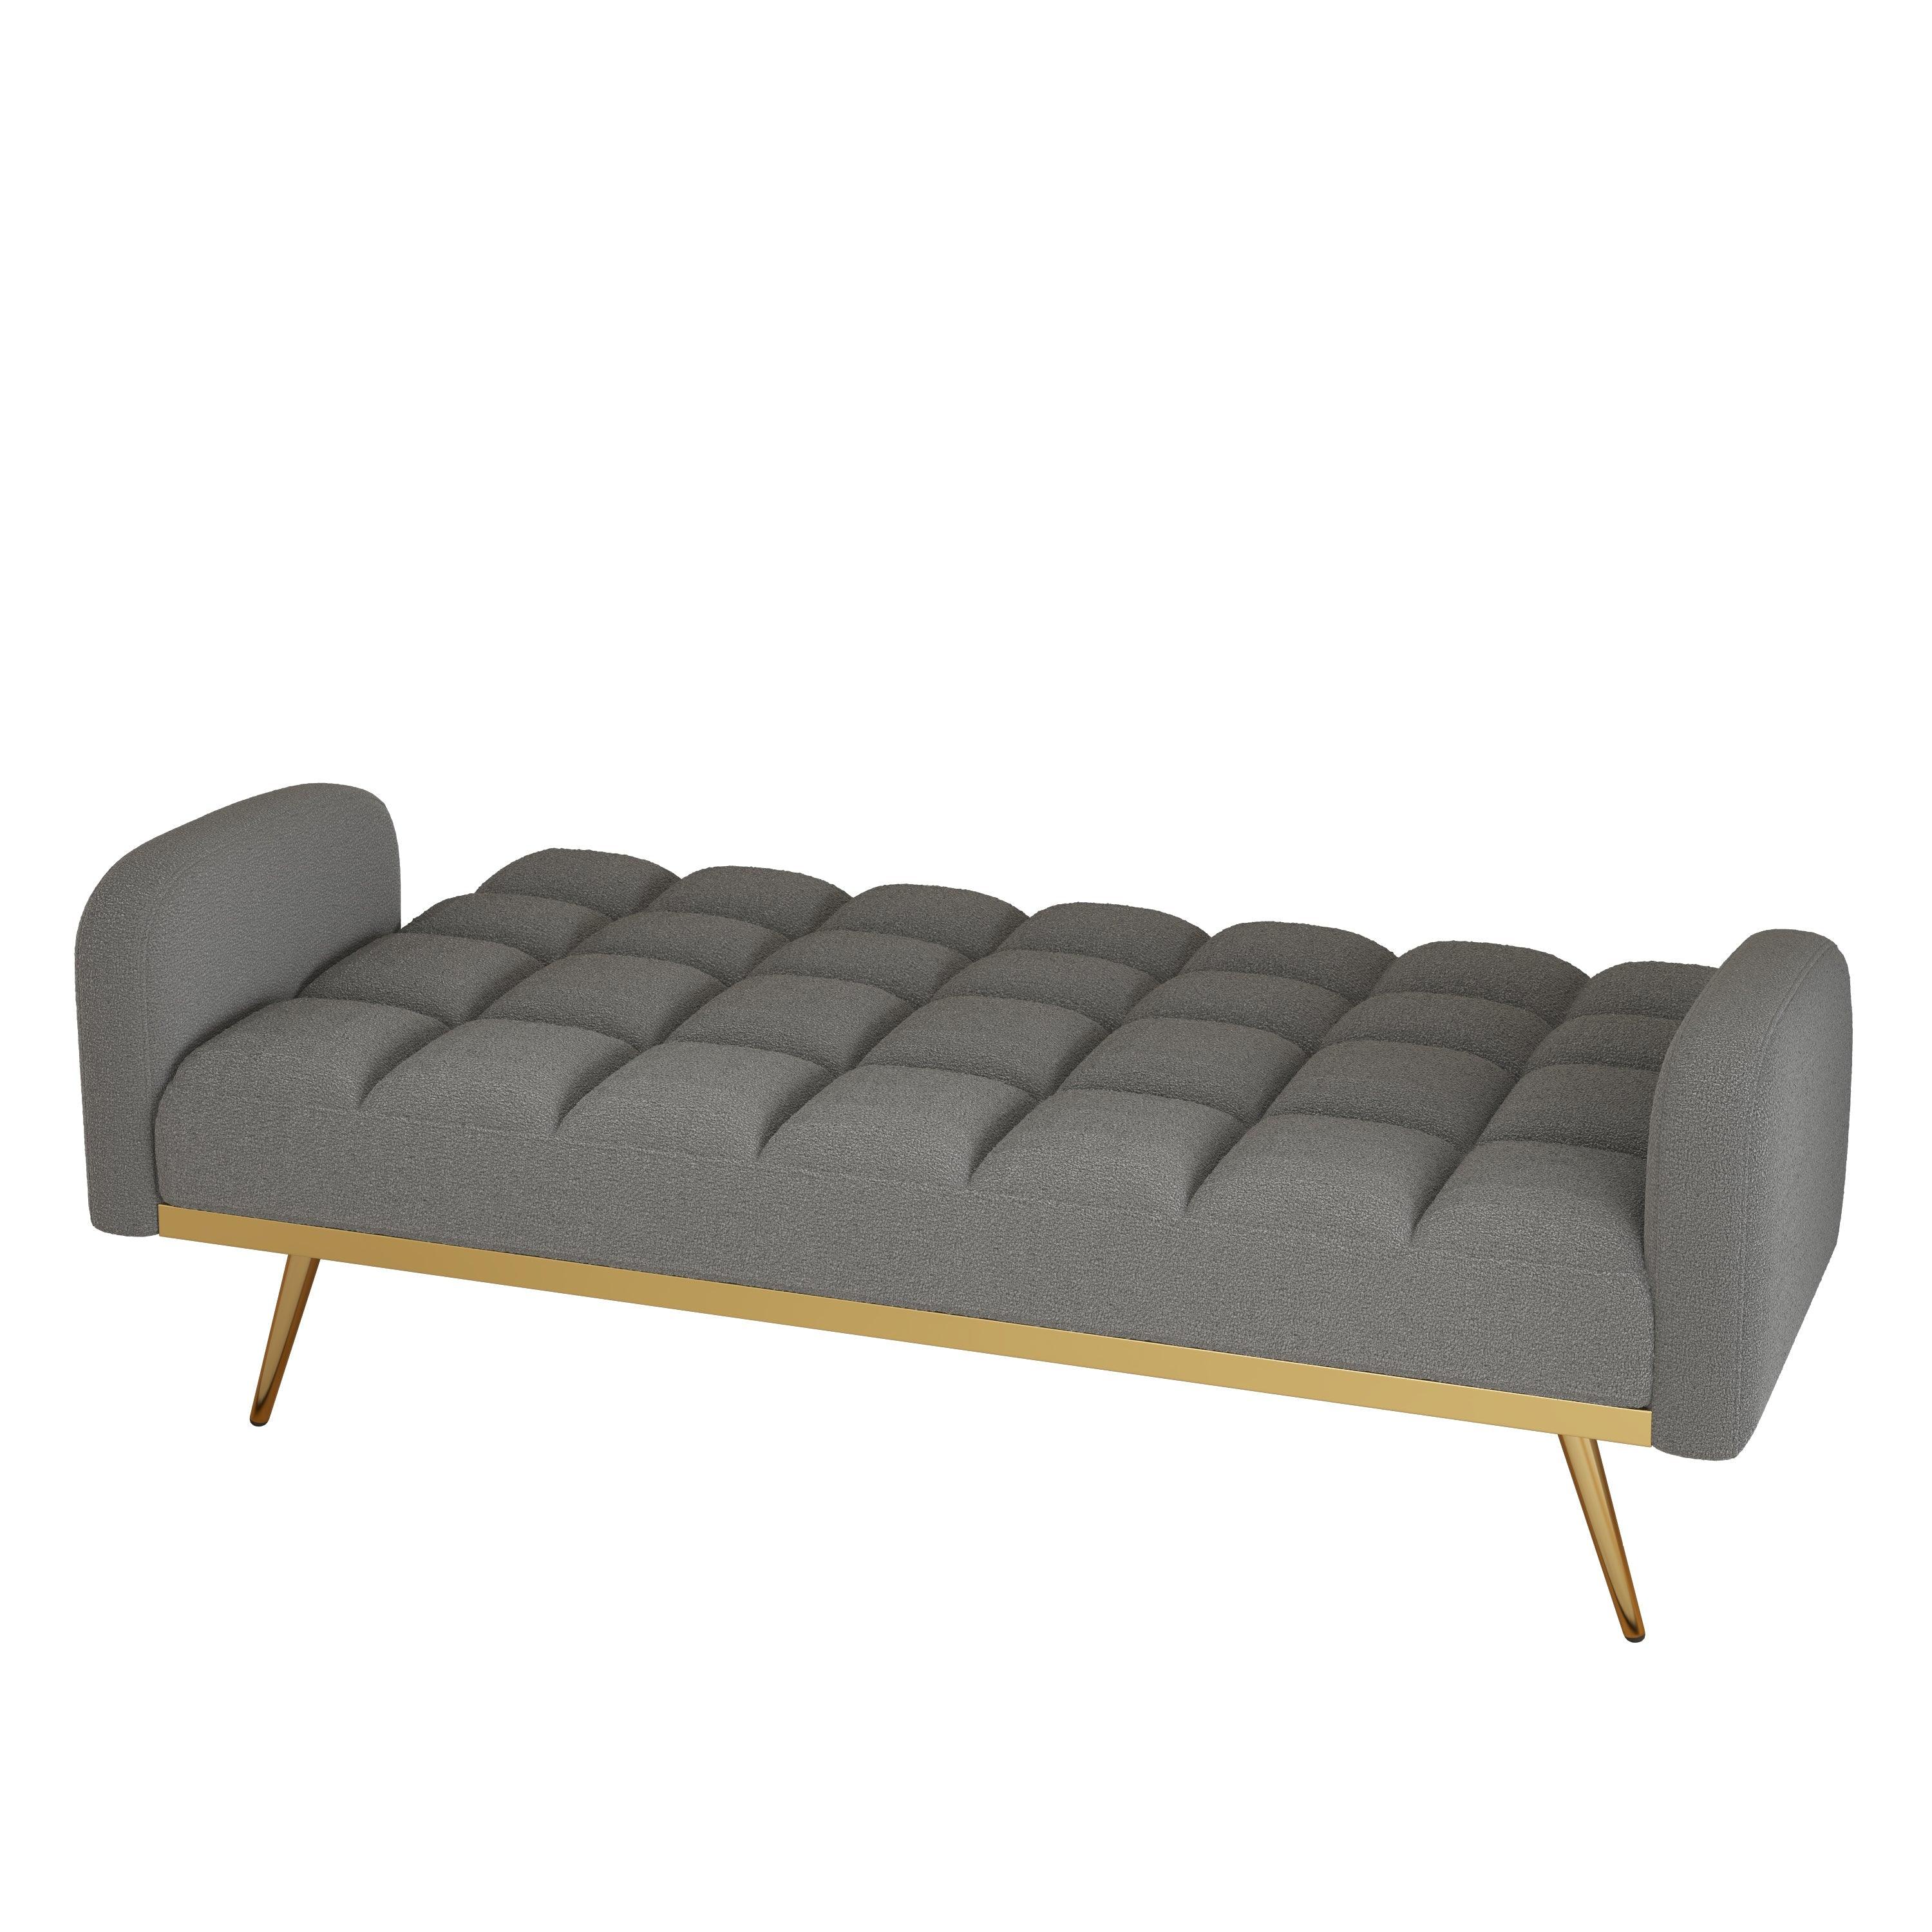 69-inch grey sofa bed with adjustable sofa teddy fleece 2 throw pillows LamCham